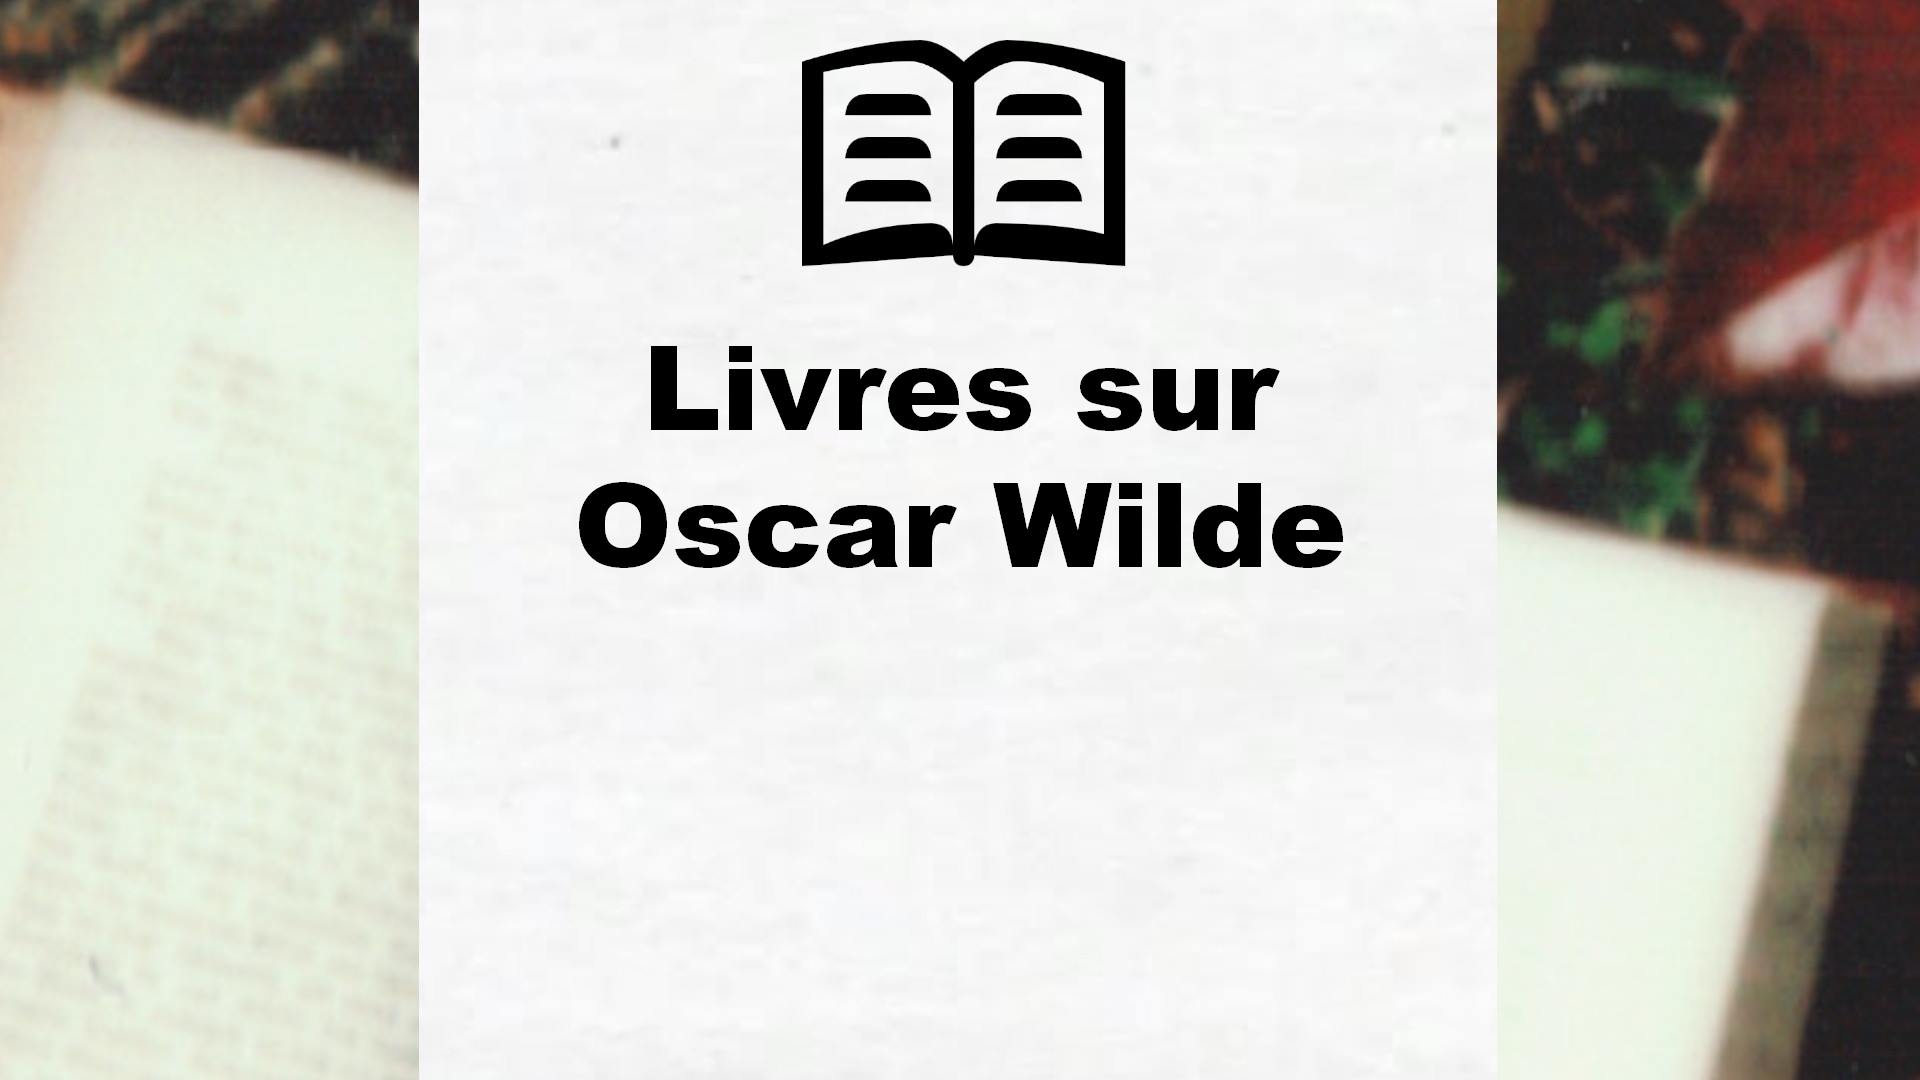 Livres sur Oscar Wilde